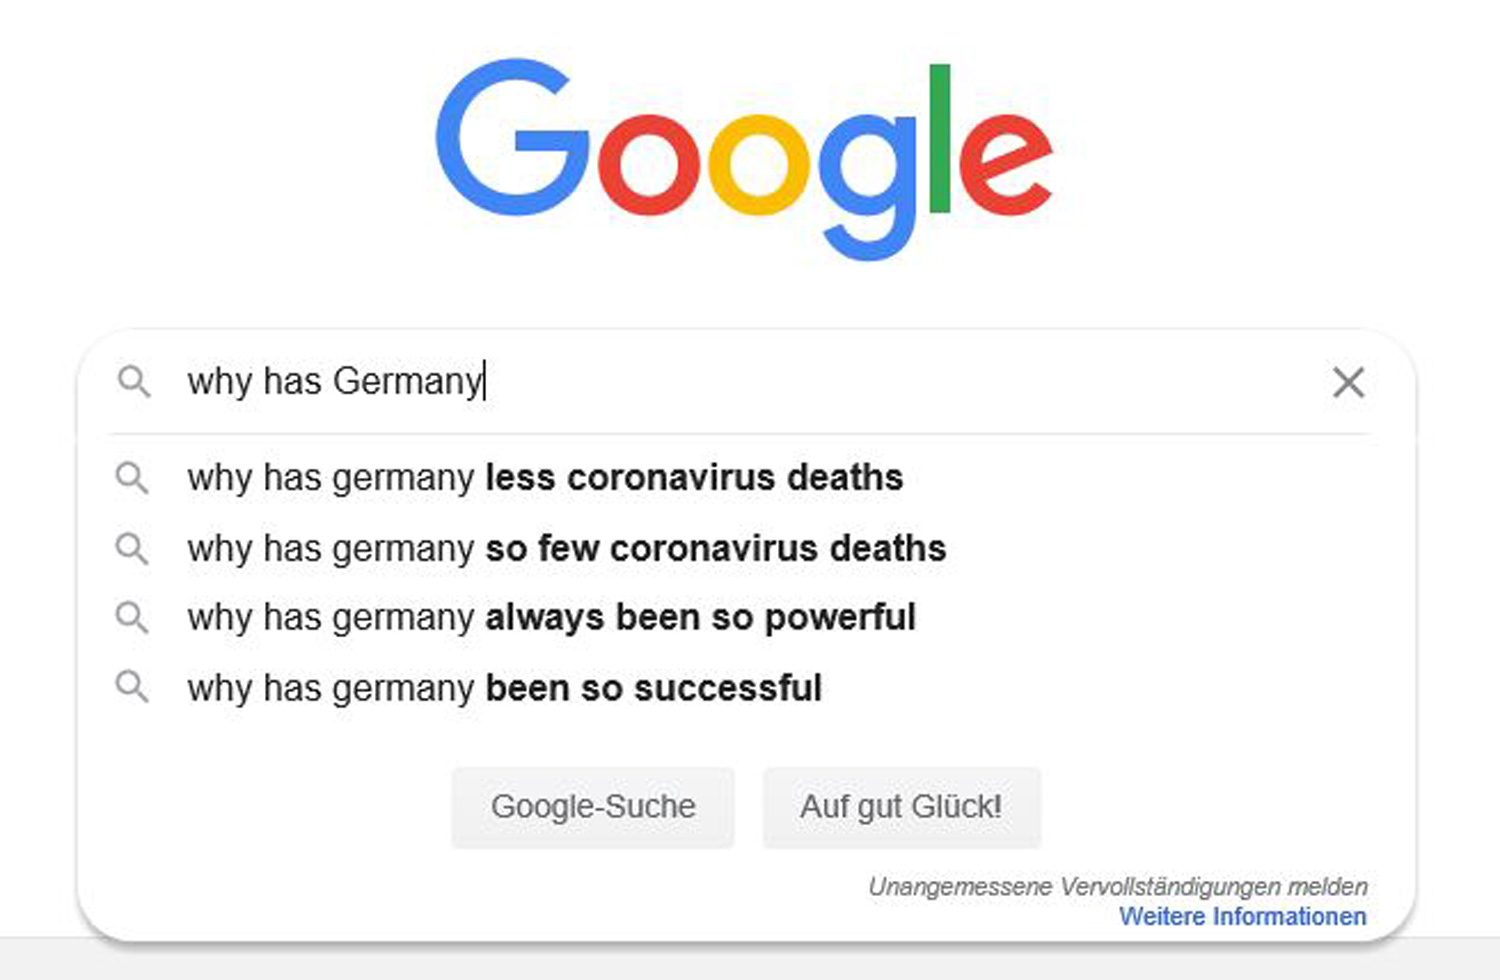 Google: "why has Germany...less coronavirus deaths"